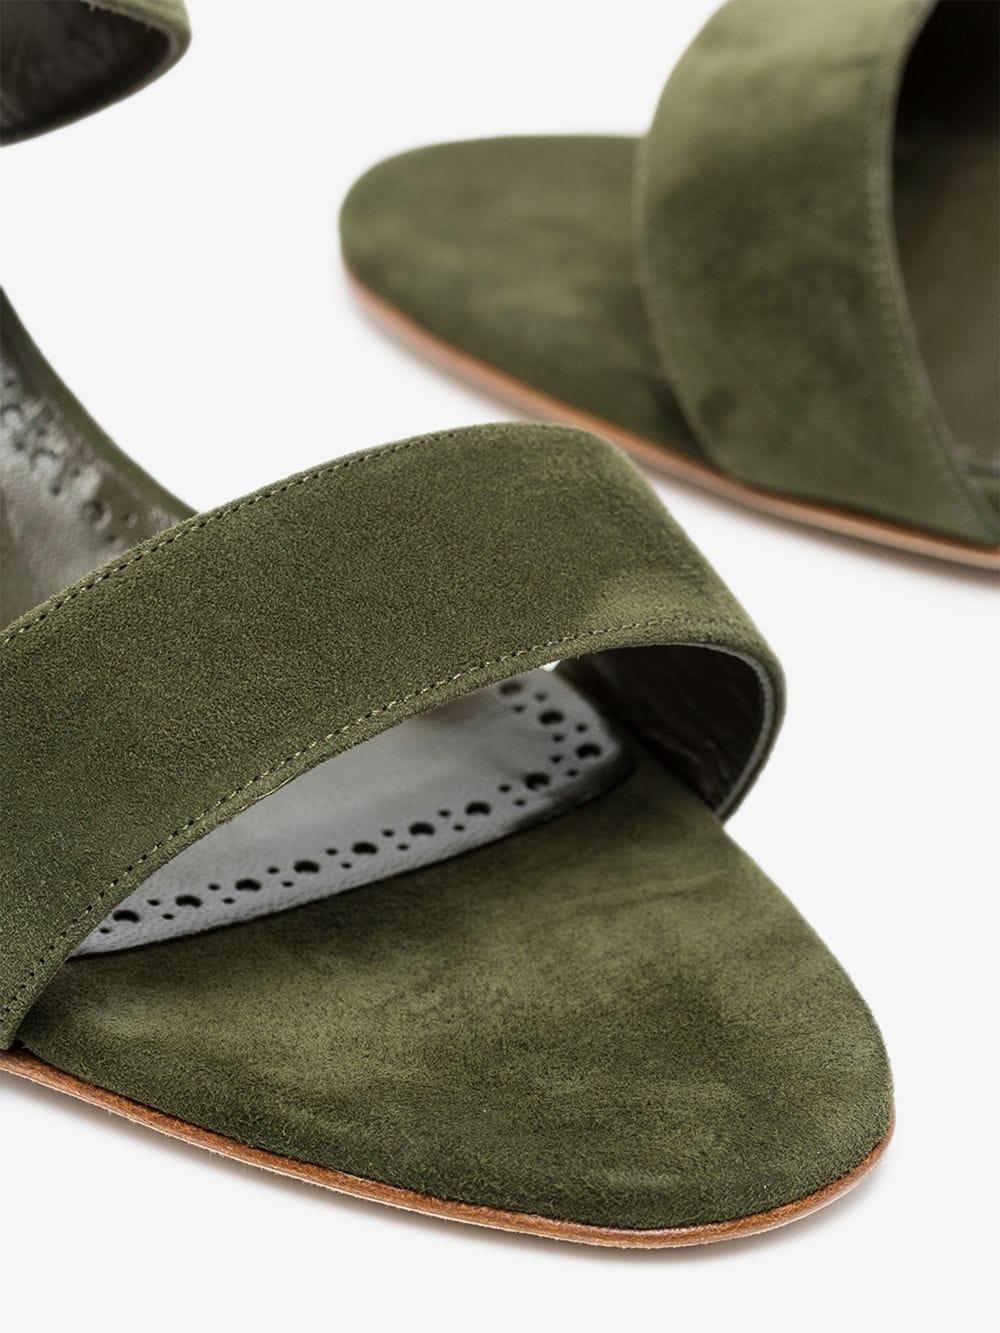 Manolo Blahnik Gable 70 Khaki Suede Sandals in Military Green (Green